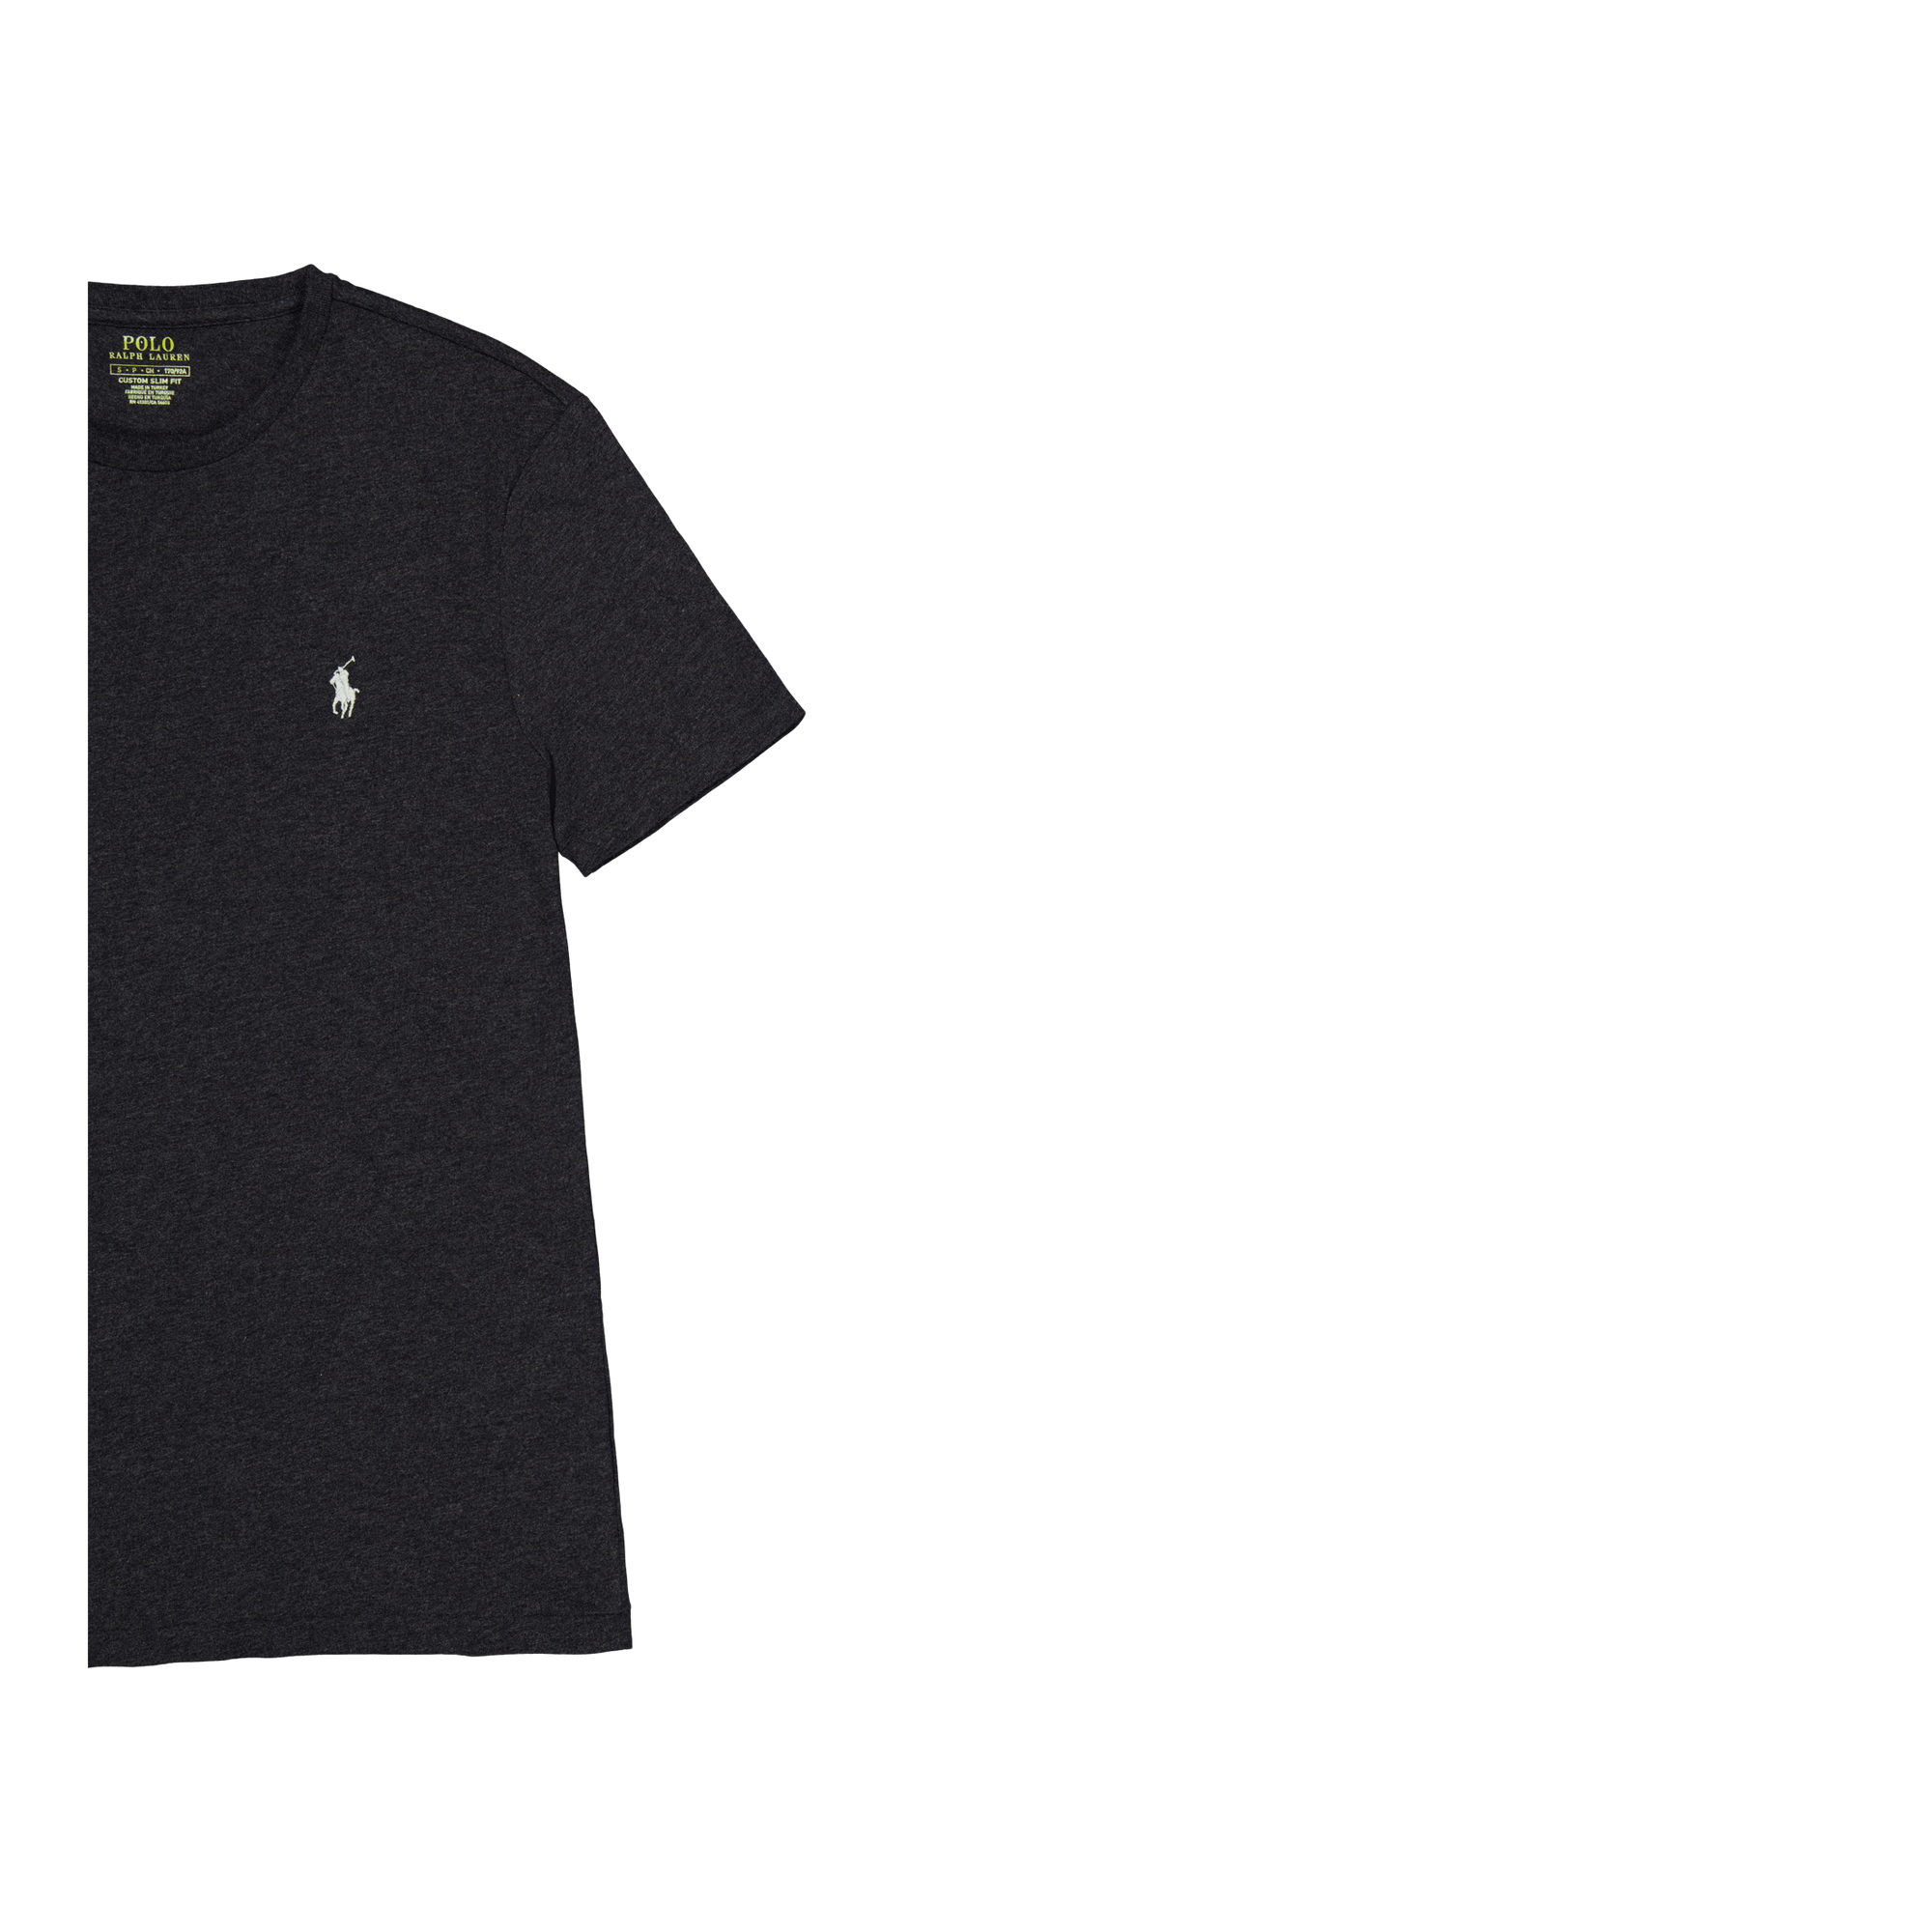 Custom Slim Fit Jersey Crewneck T-Shirt Black Marl Heather